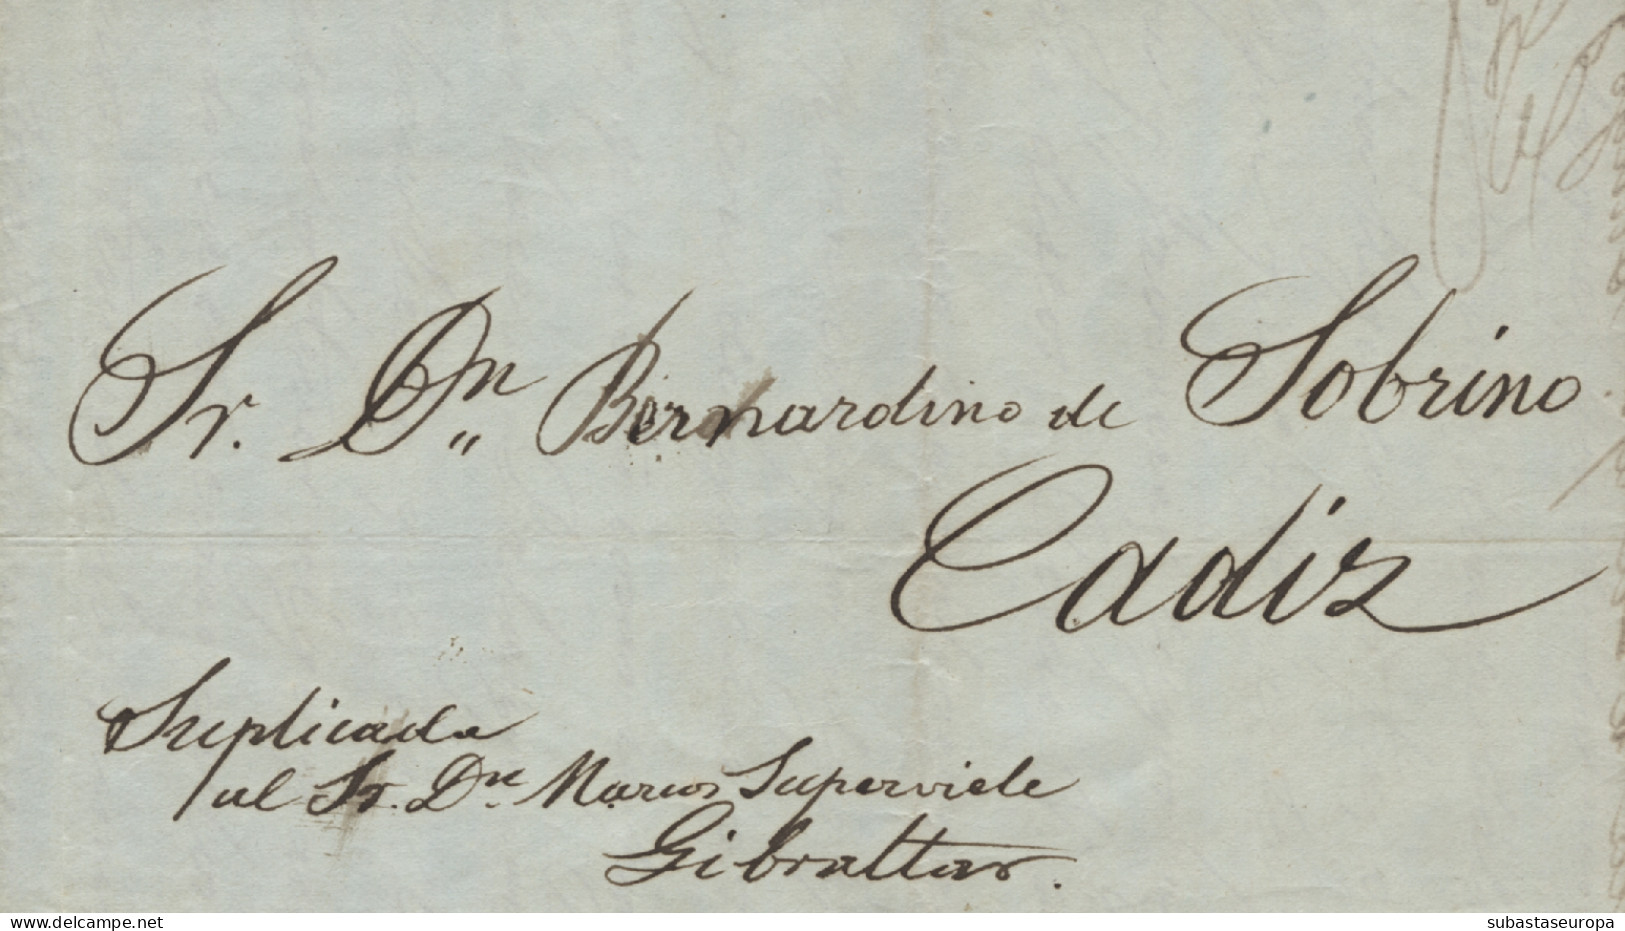 MACAO. 1852. Carta Circulada De Macao A Cádiz. Manuscrito "Suplicada Sr. D. Marcos Superviele - Gibraltar".  - Lettres & Documents